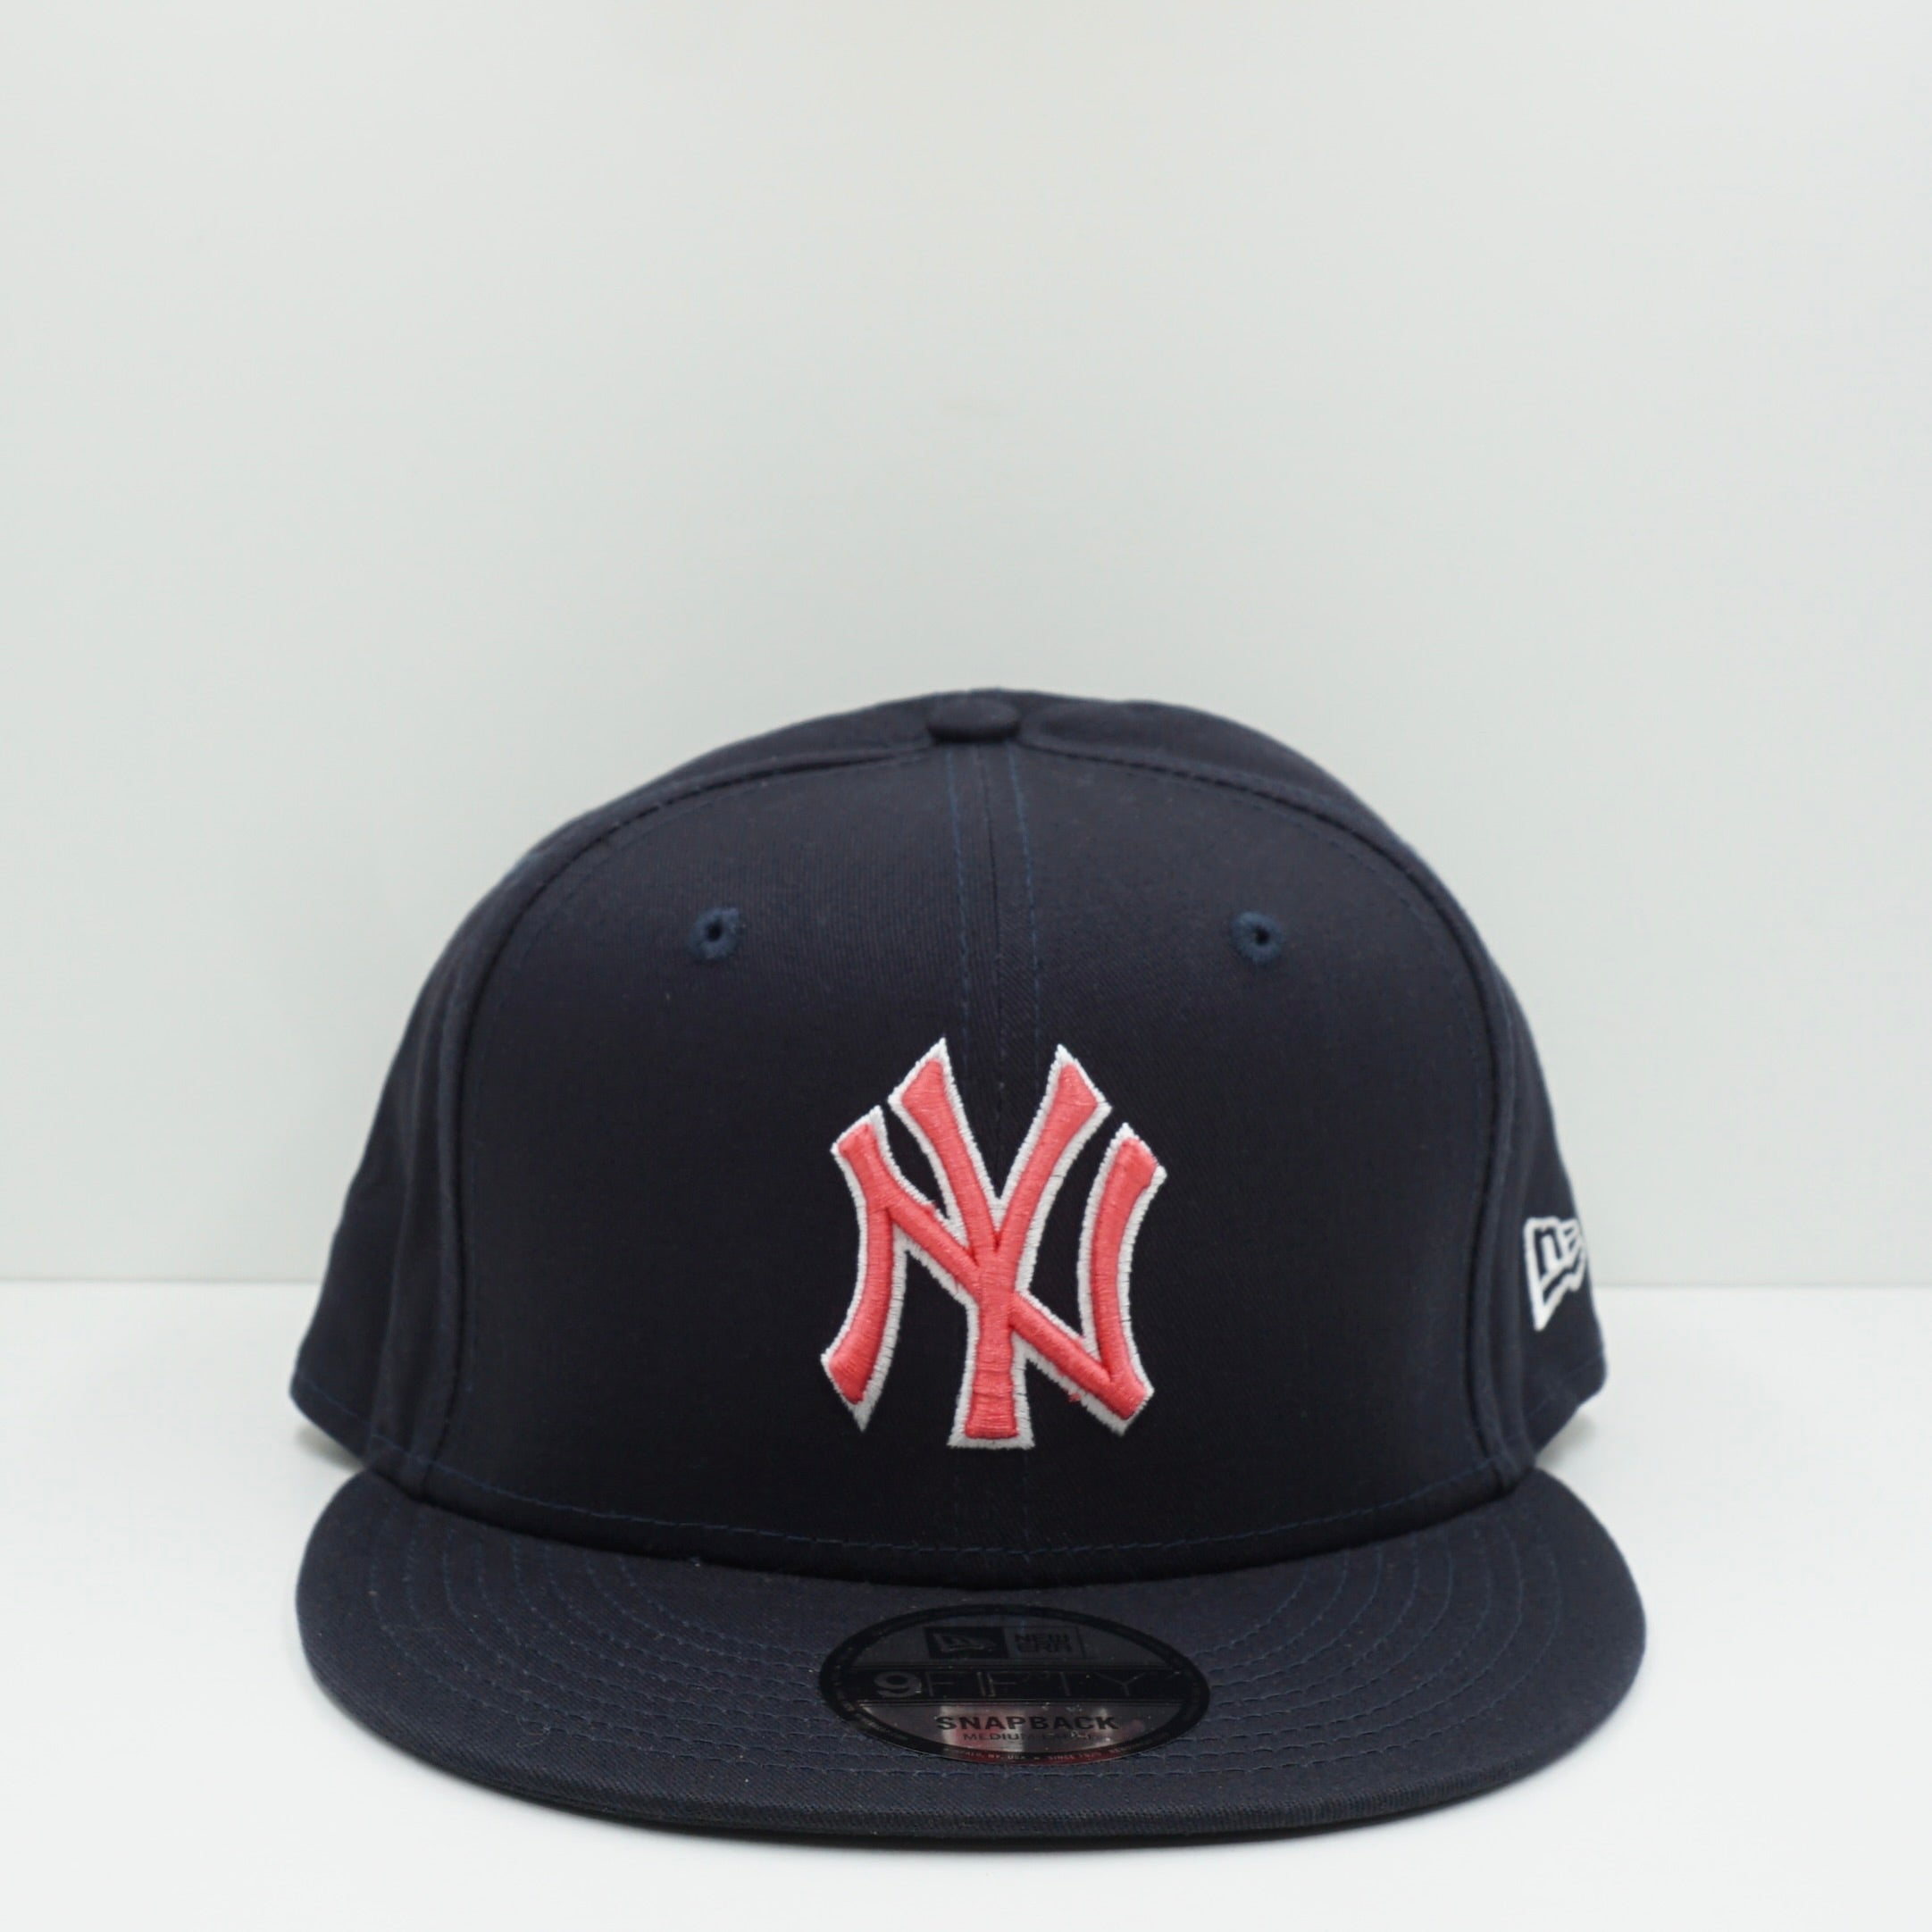 New Era New York Yankees Navy/Pink Snapback Cap